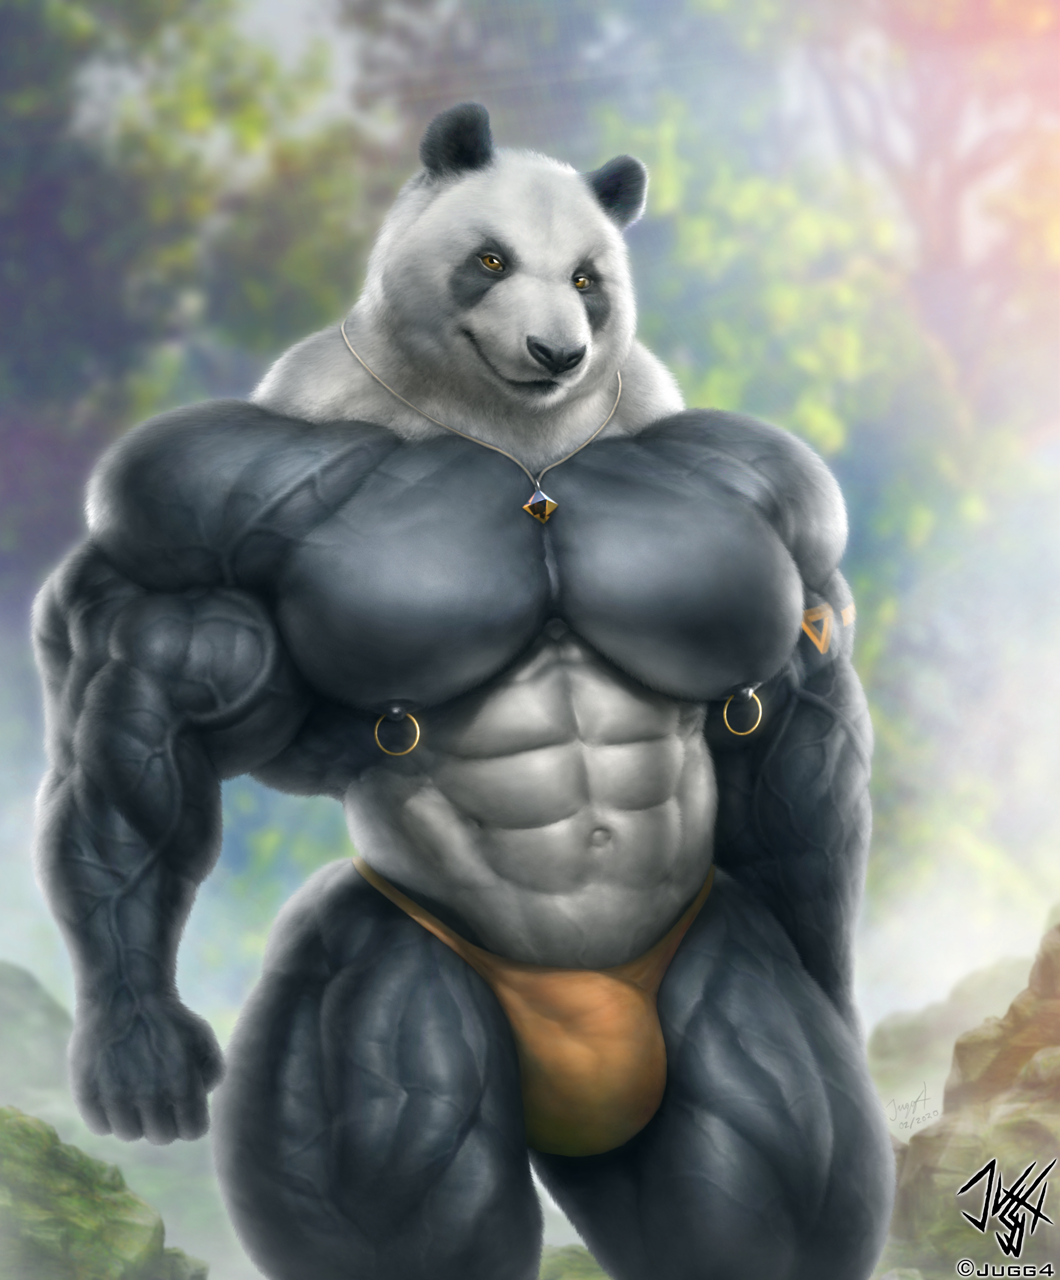 Muscle growth Панда. Накаченный медведь. Медведь качок. Мускулистый медведь. 3д качка